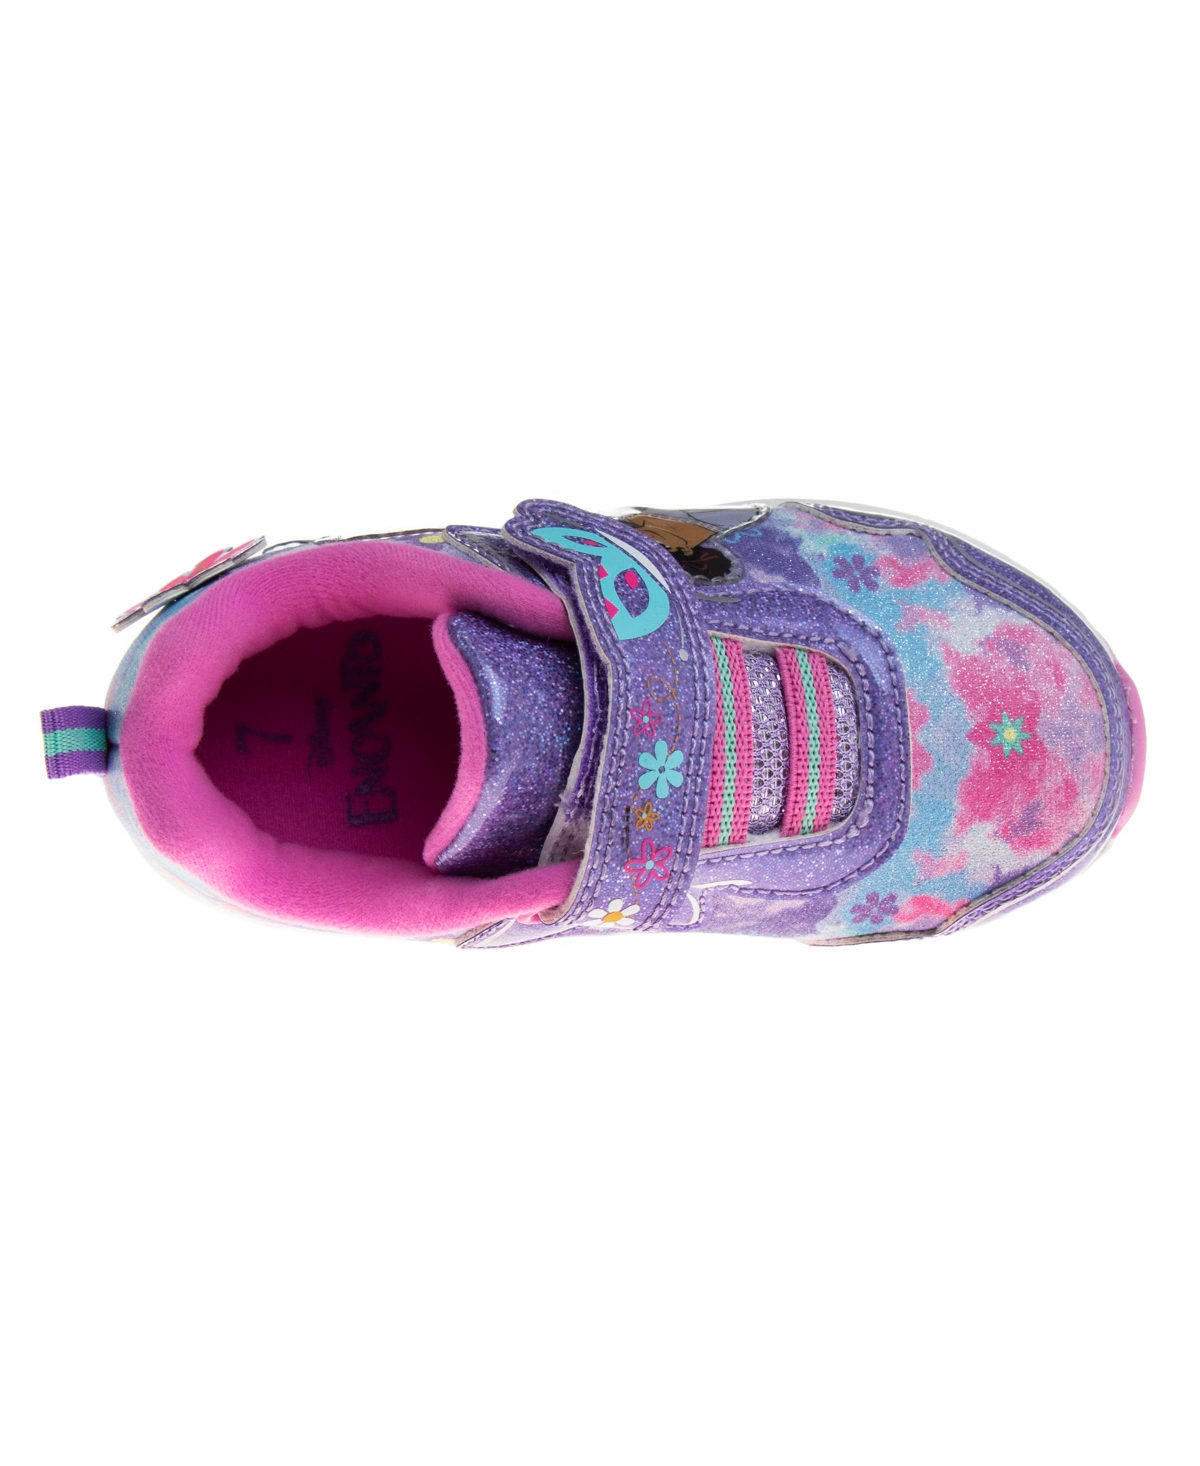 Shop Disney Toddler Girls Encanto Sneakers In Purple,fuchsia